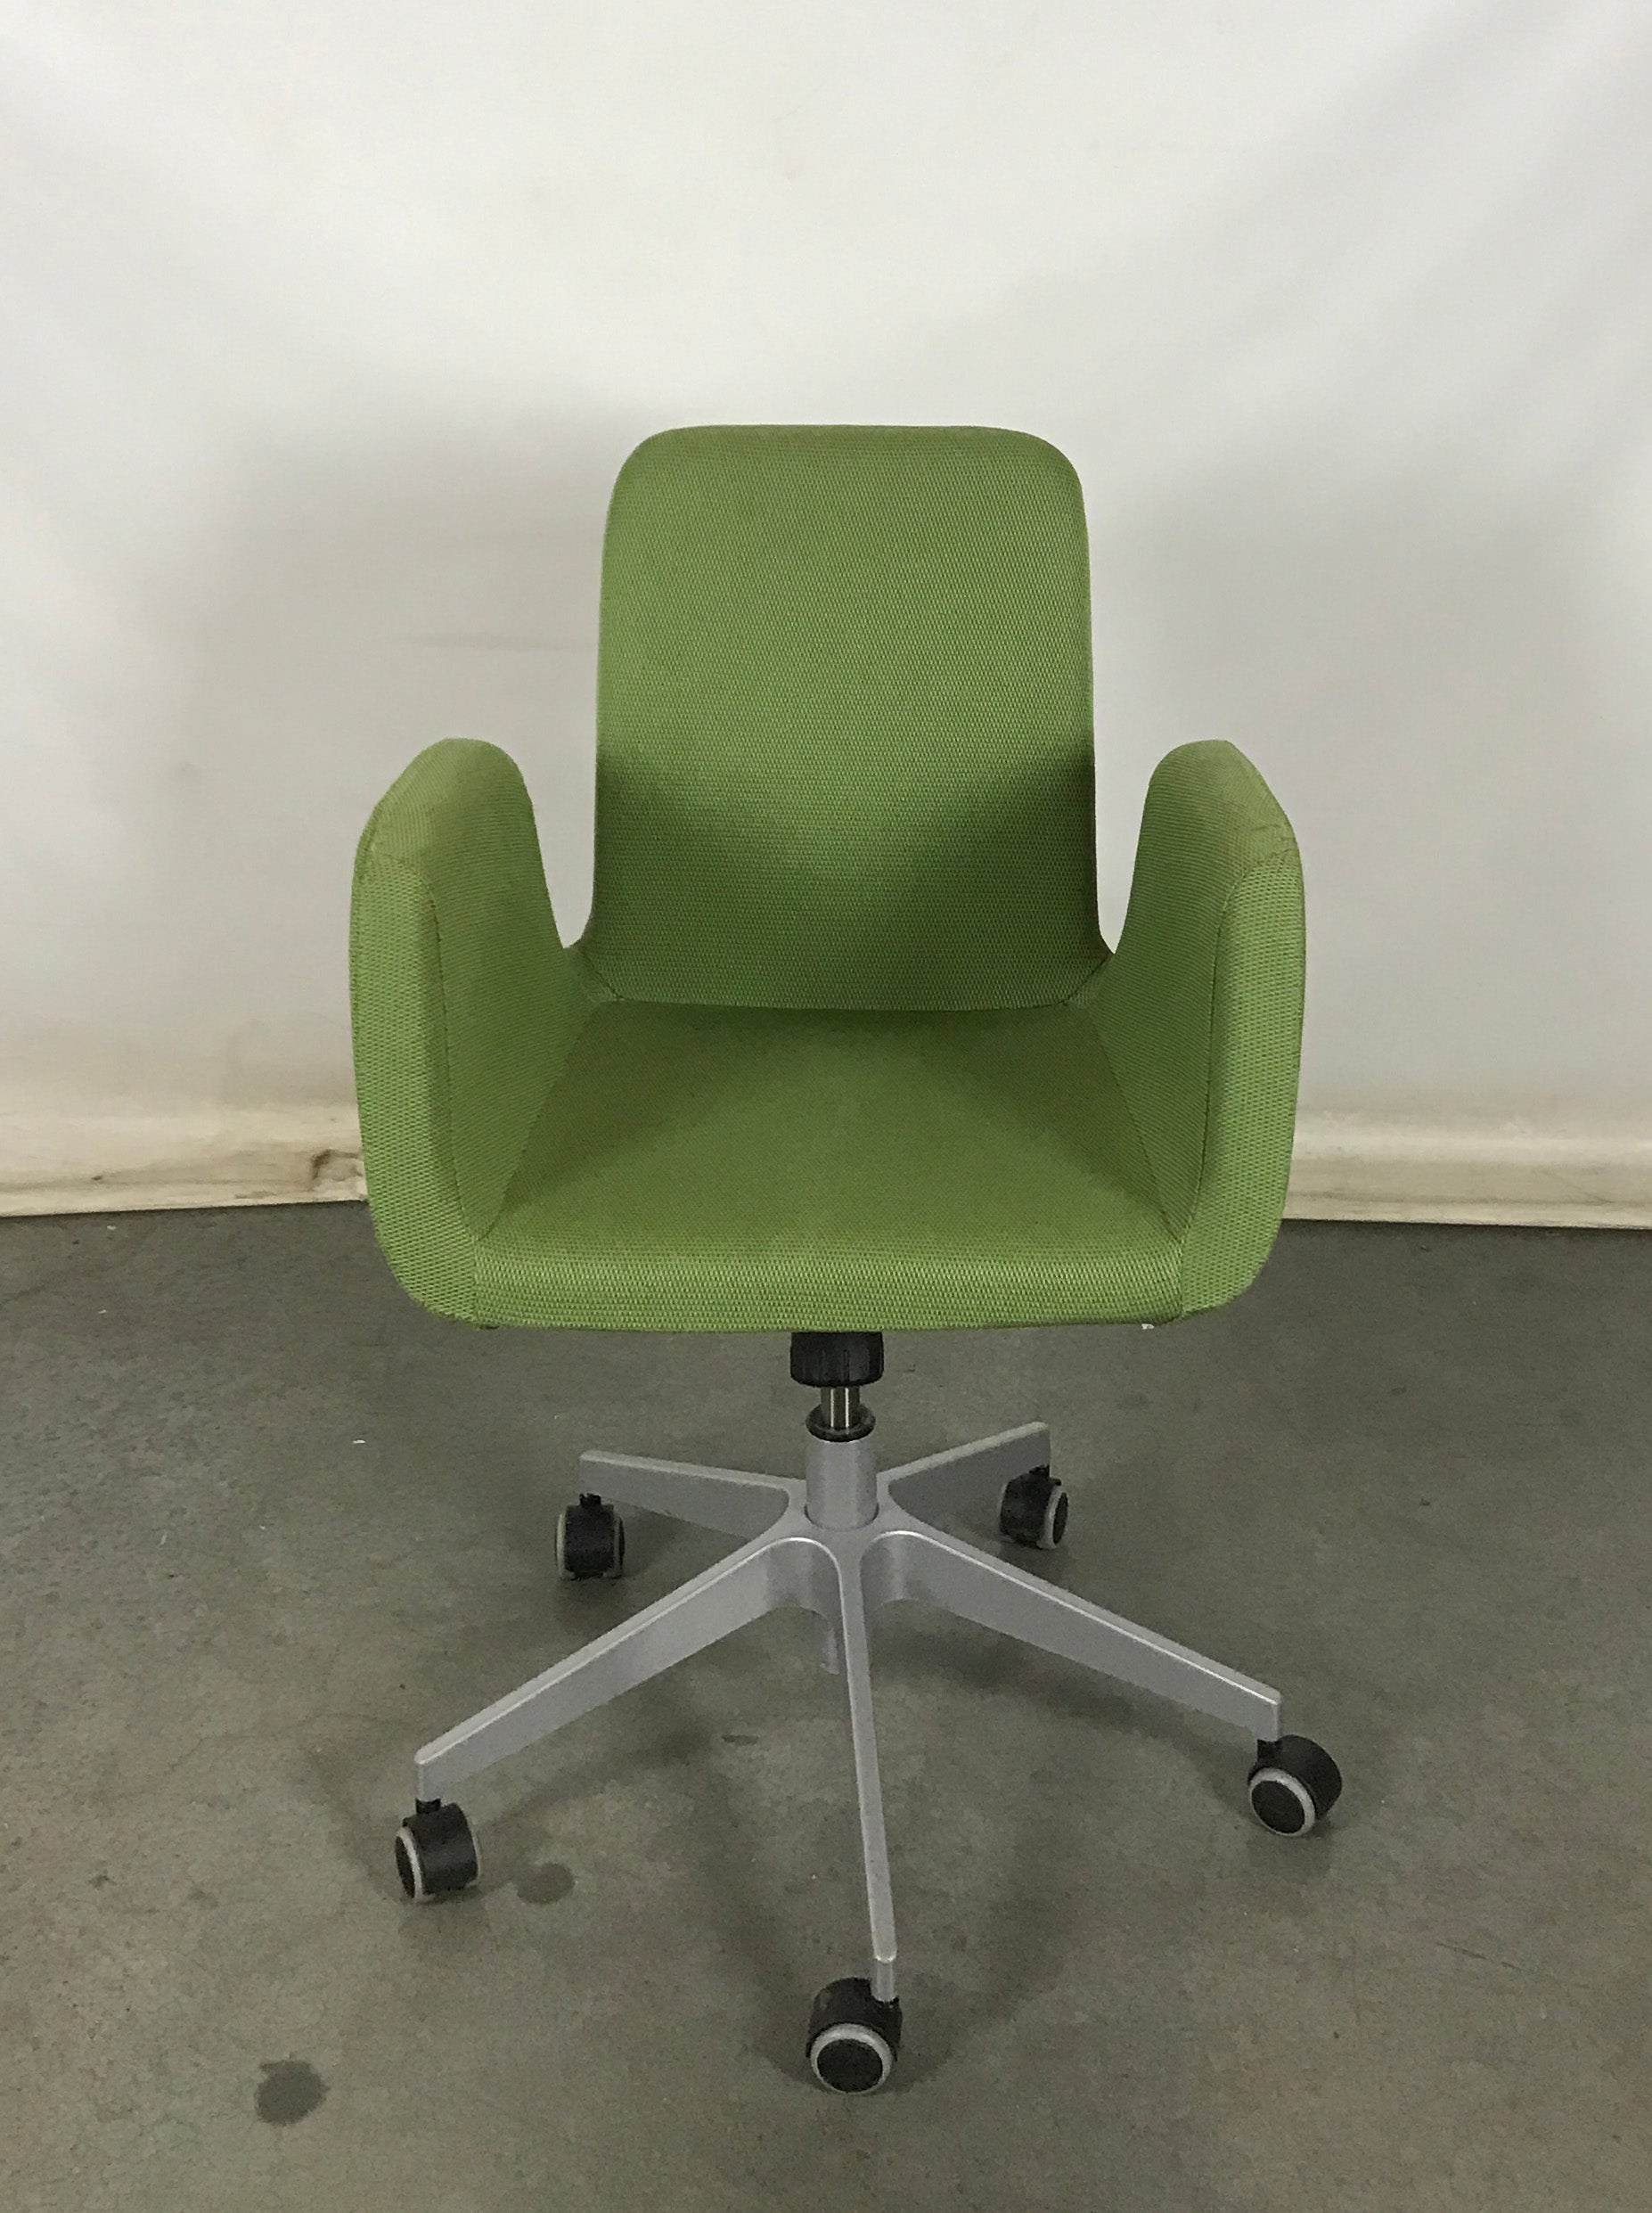 Rolling Upholstered Footstool – MSU Surplus Store